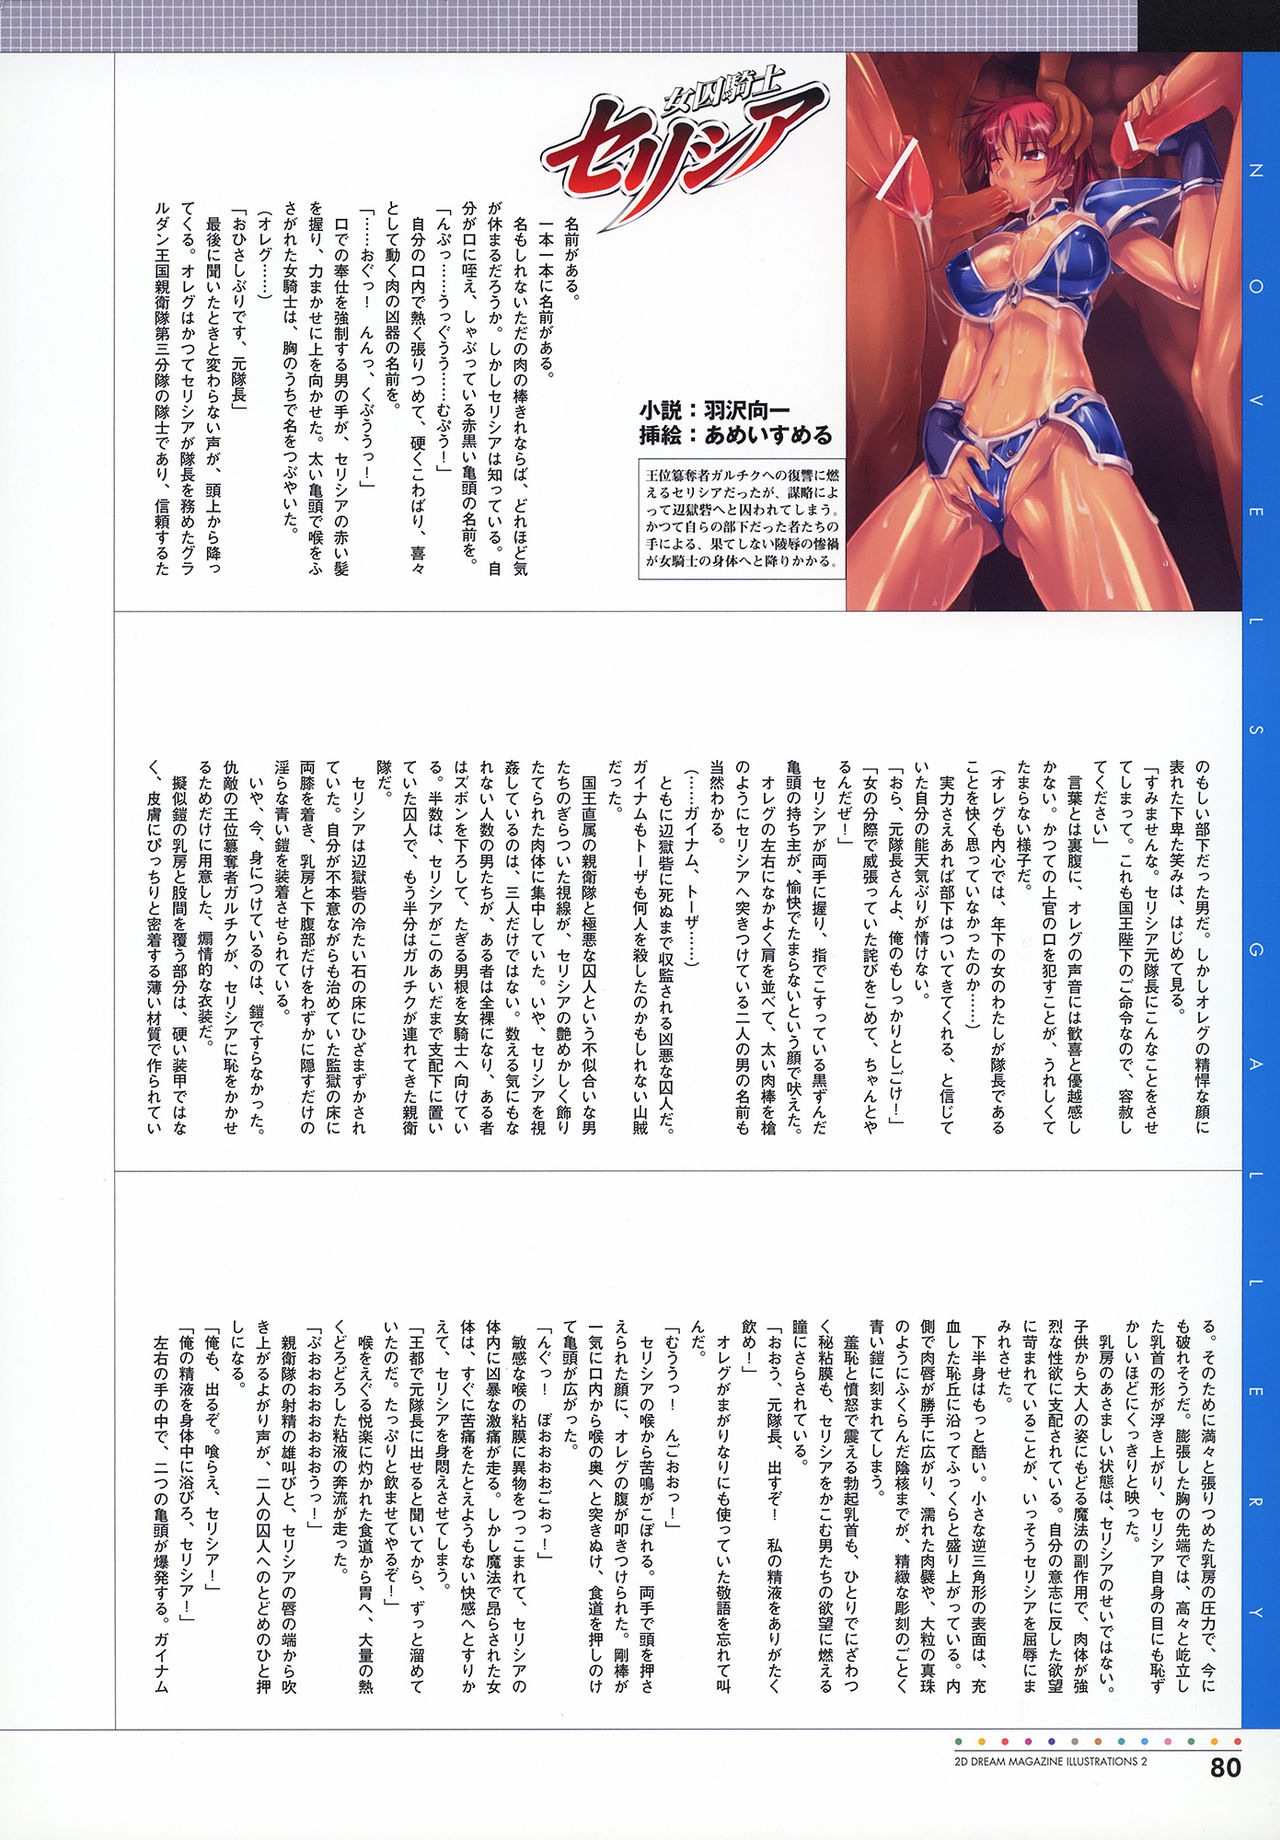 [Illustrations] Nijigen Dream Magazine Illustrations #2 81